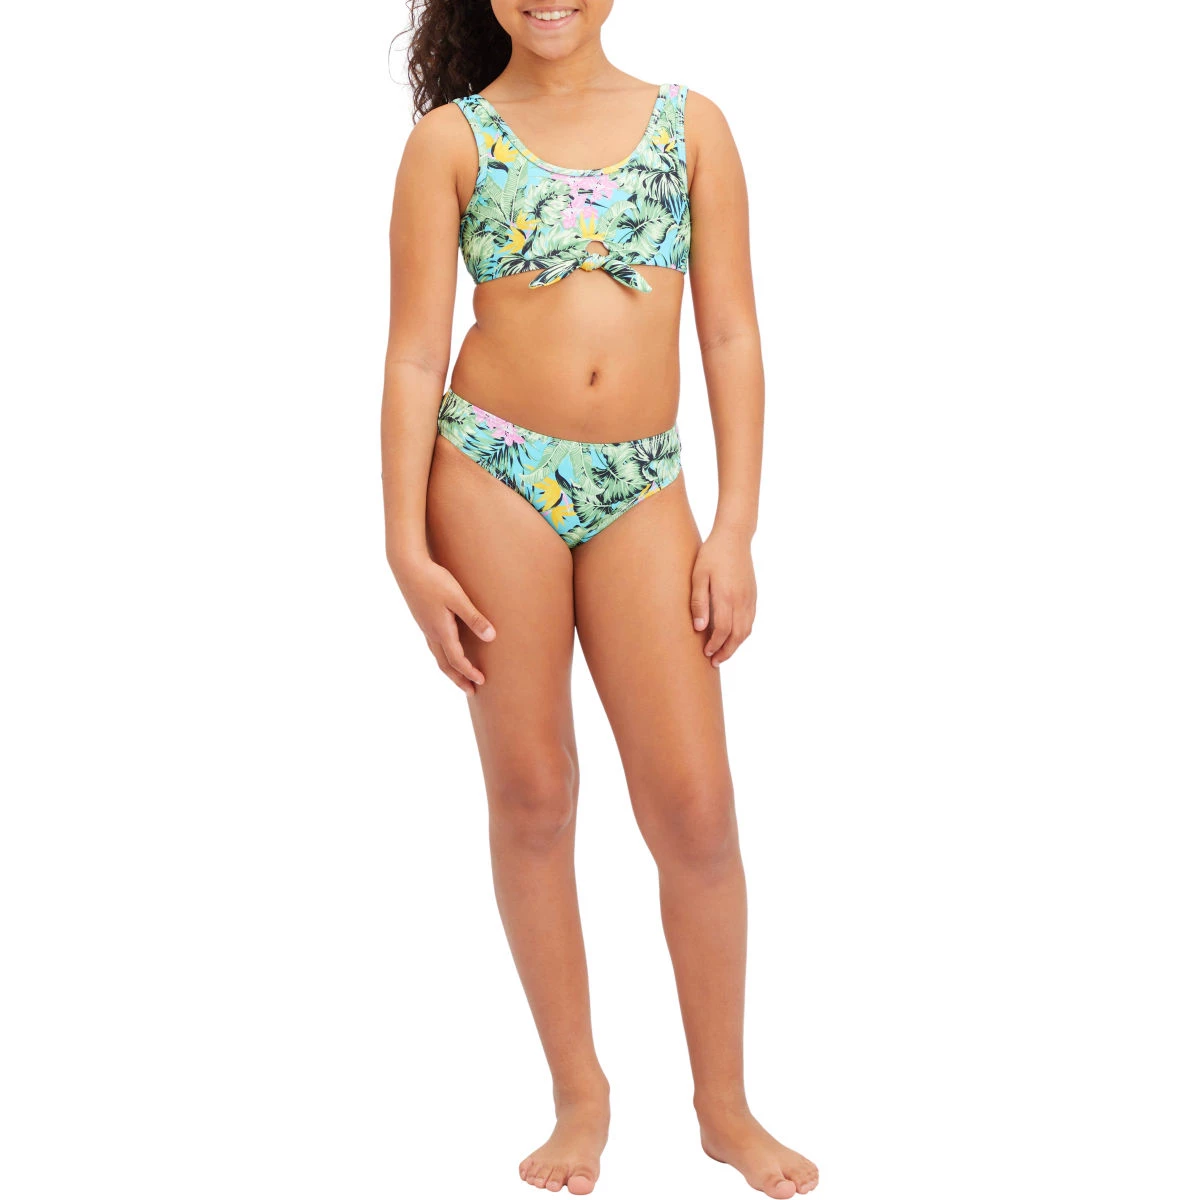 Firefly Selda Bikini Junior - Bikini's - Bad Beach - Intersport van den Broek / Biggelaar